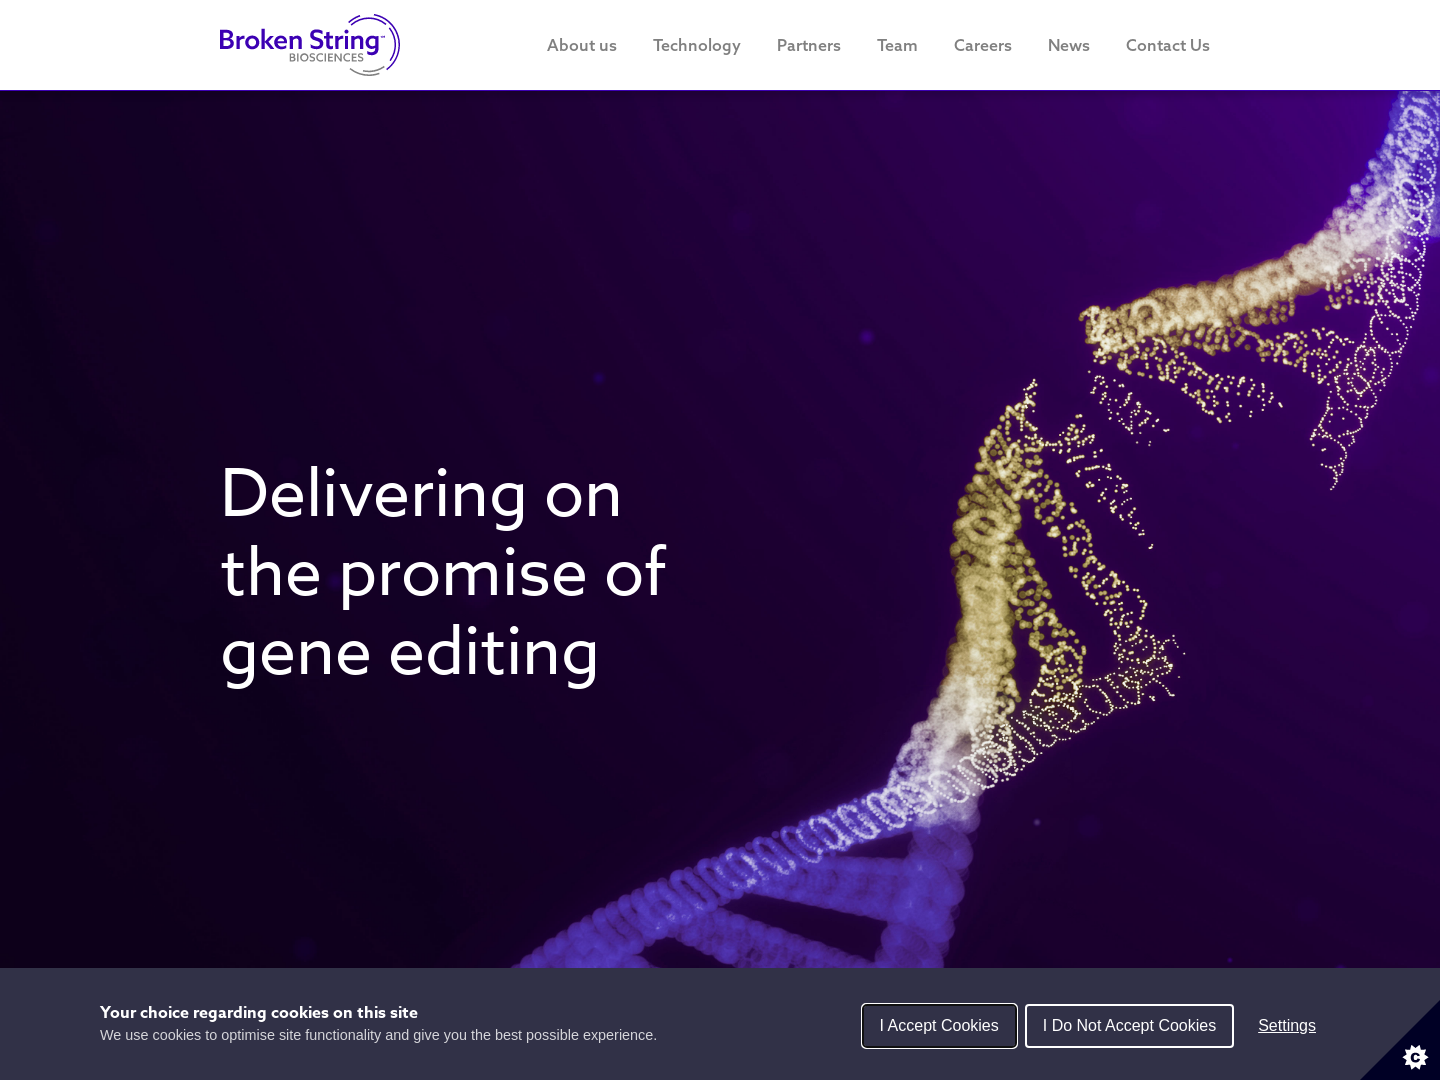 "Biosciences Company Broken String Raises $15M for Genomics Platform"